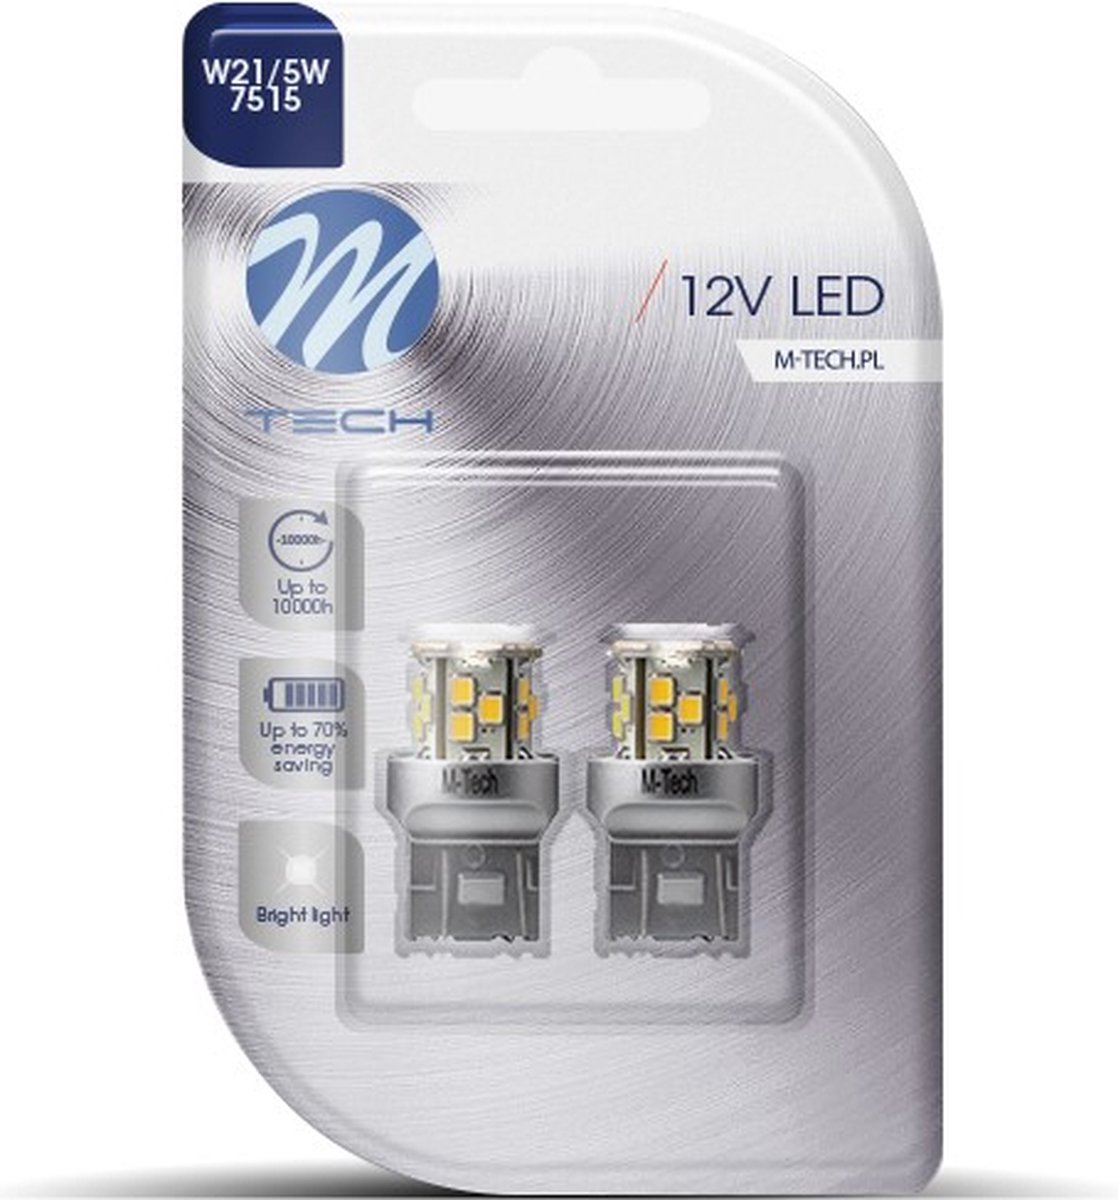 M-Tech LED W21/5W 12V - Basic 21x Led diode - Wit - Set